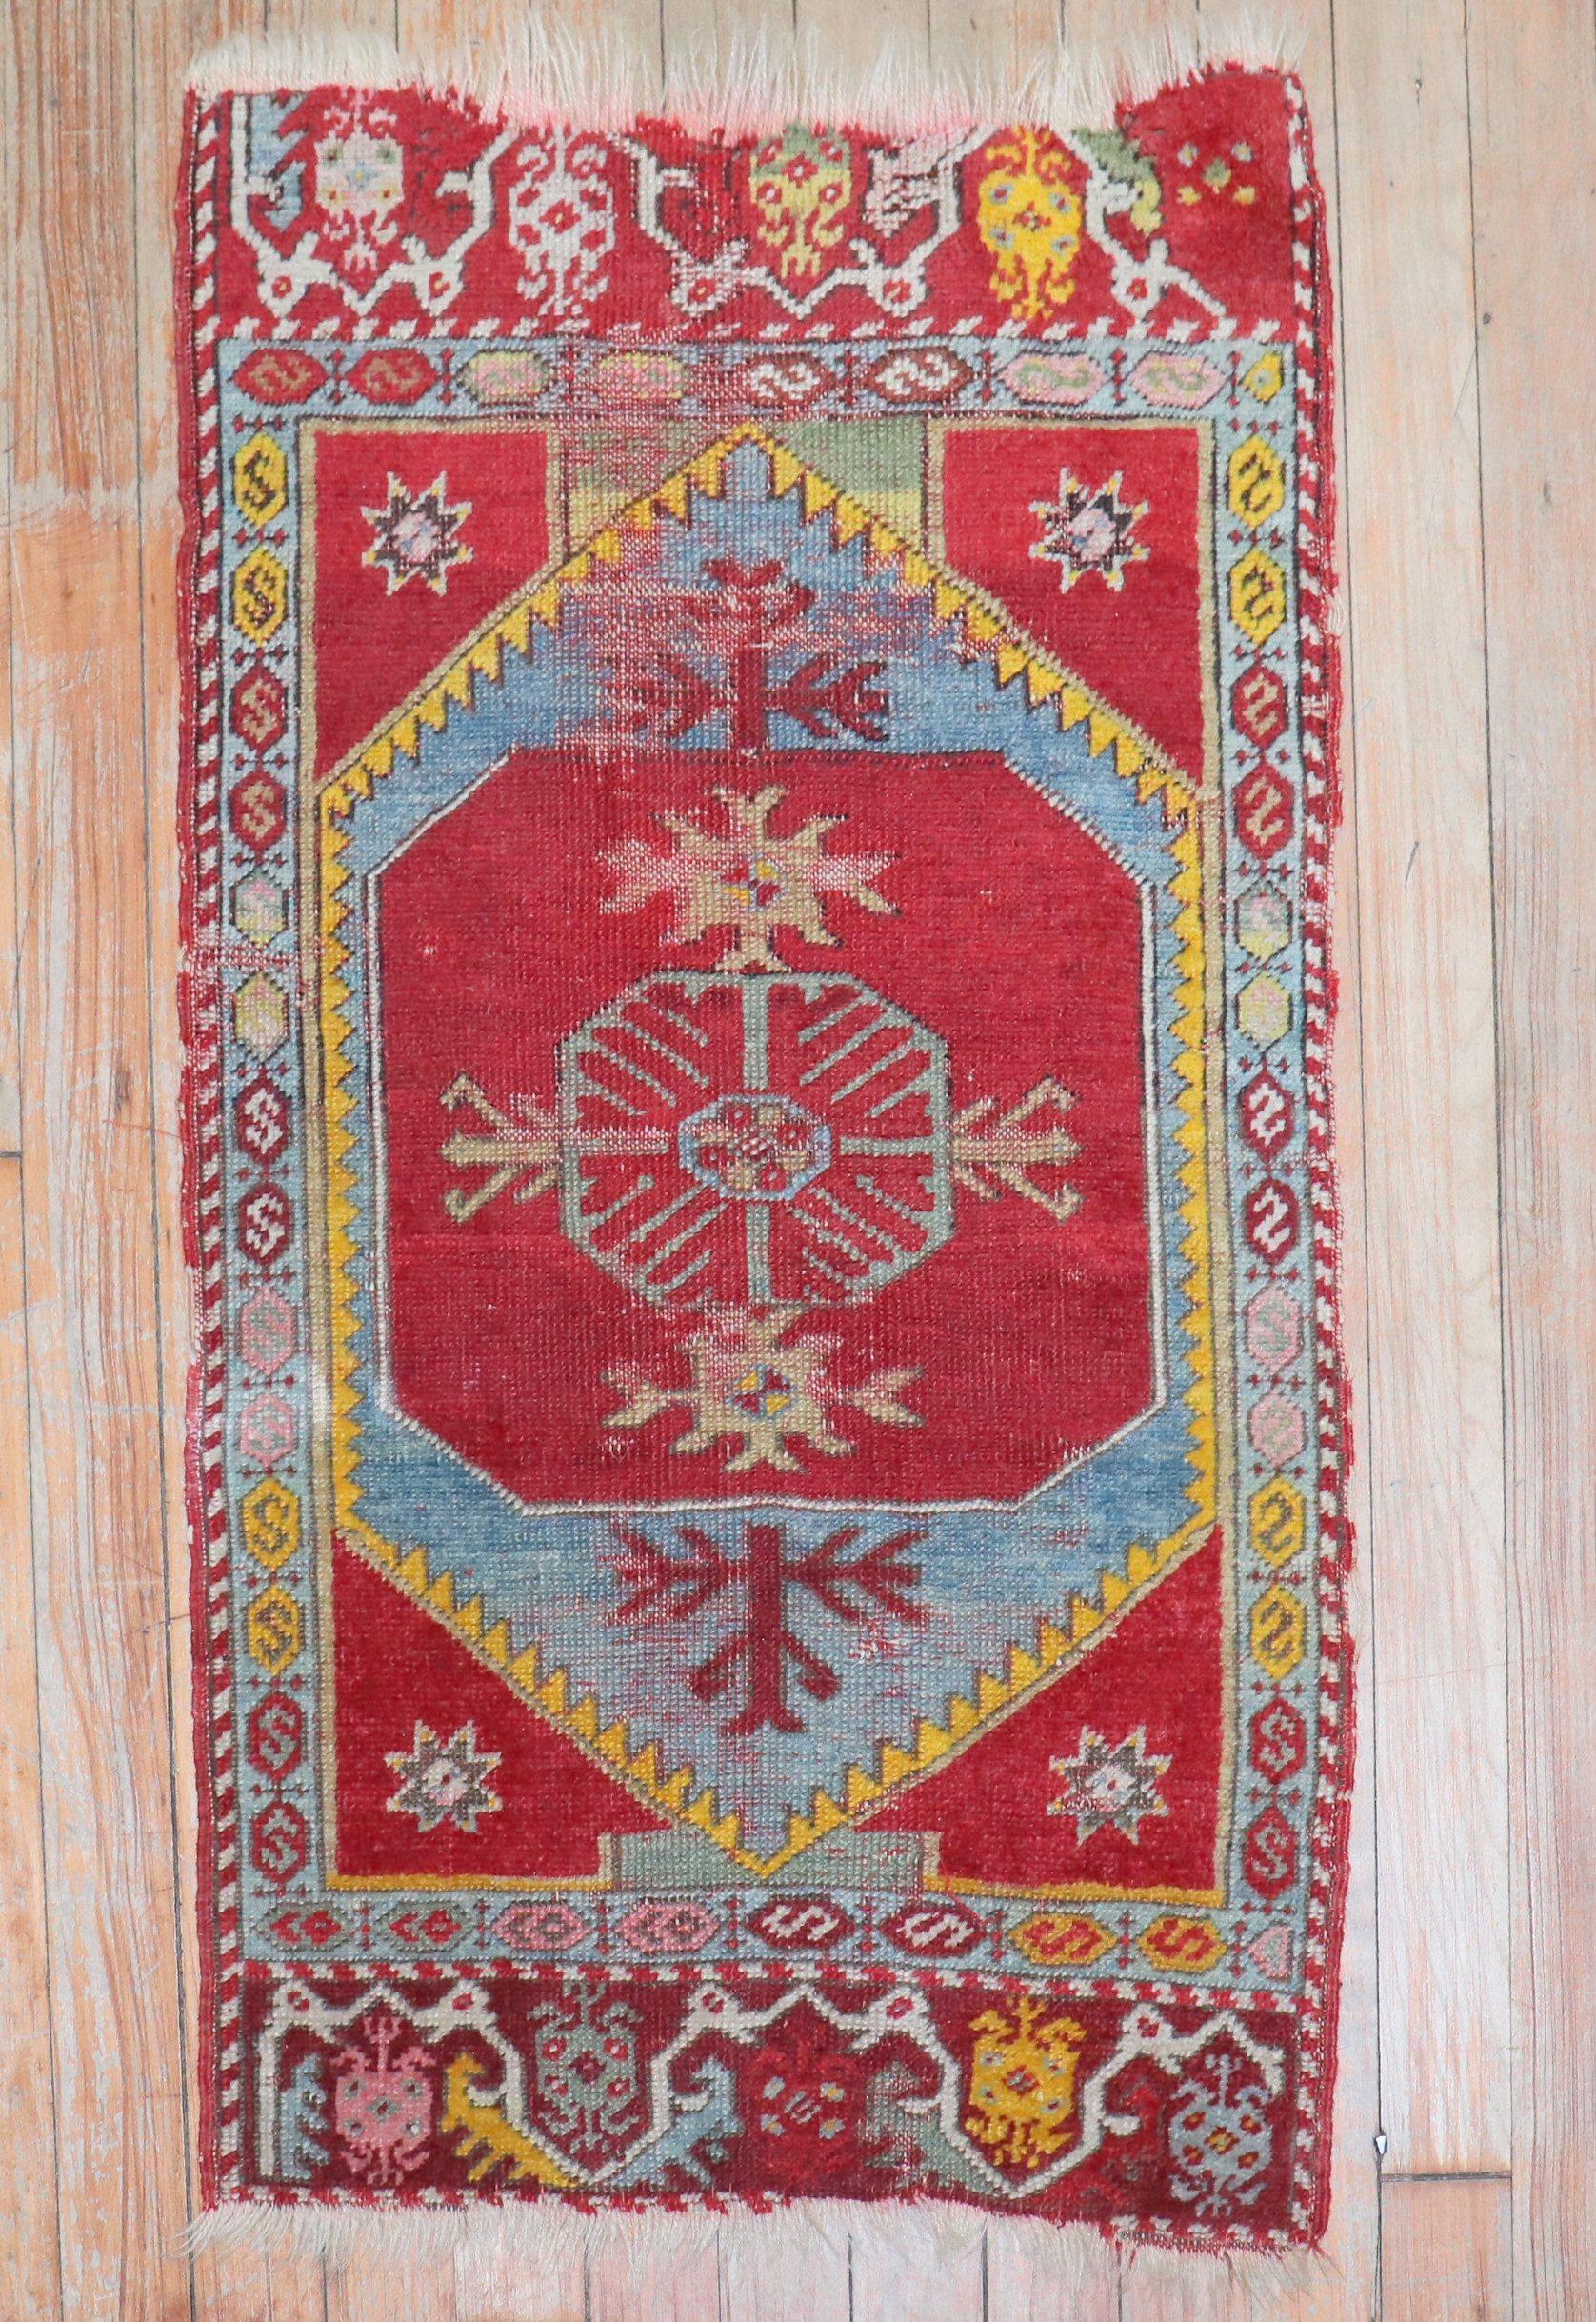 Colorful Late 19th century Turkish Yastik rug

Measures: 1'8'' x 2'10''.